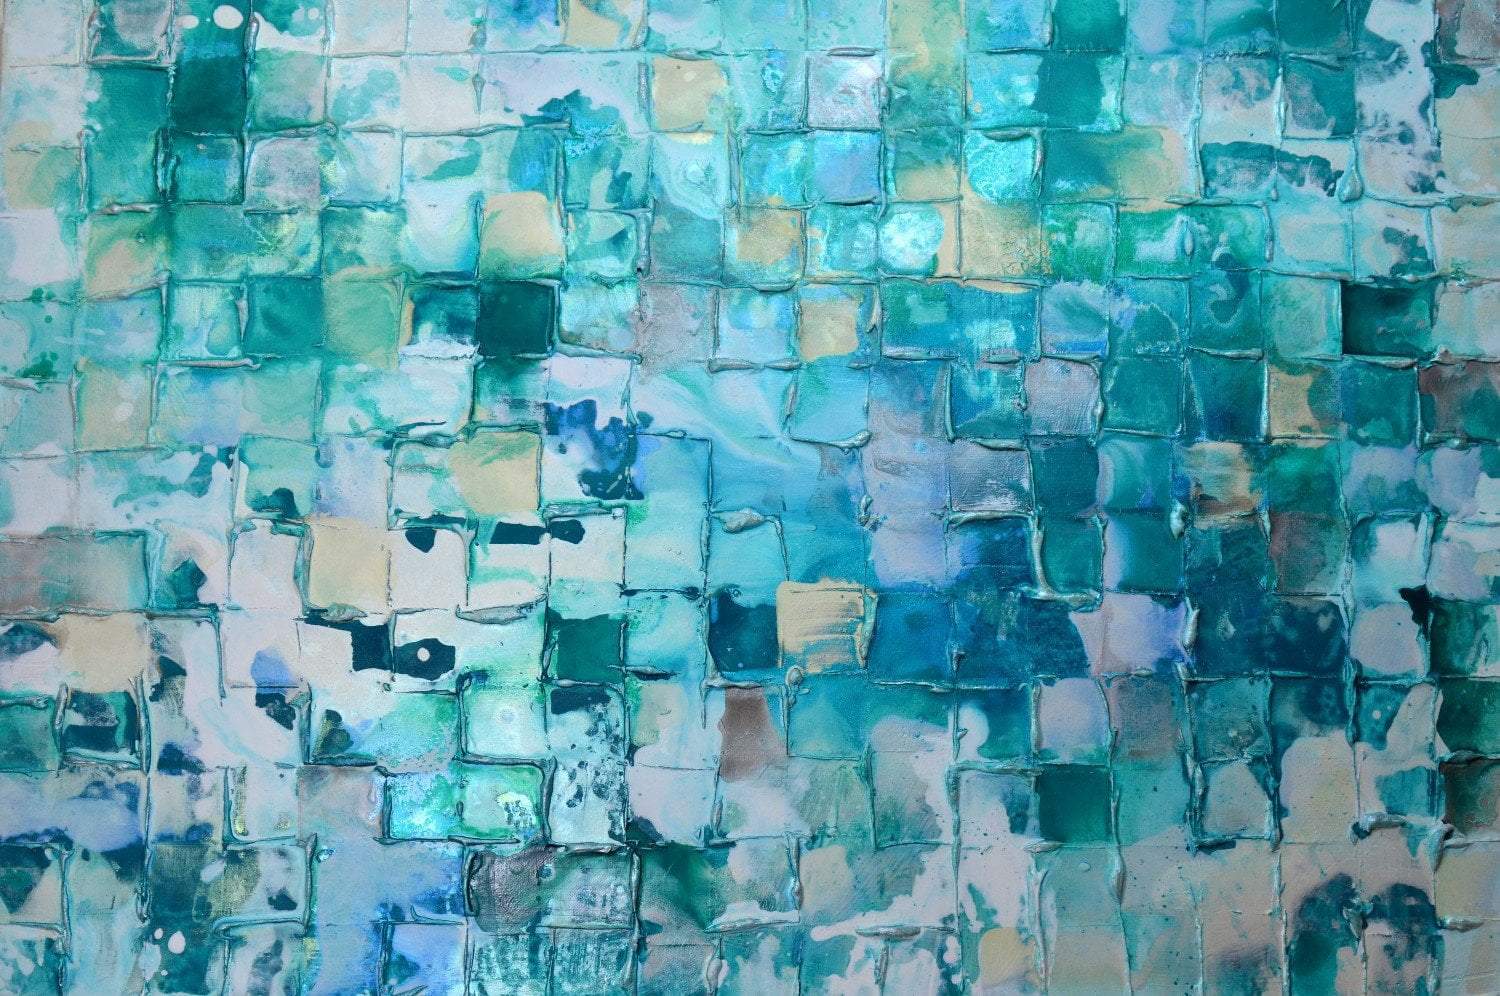 Ocean Mosaic - Limited Edition Art Prints